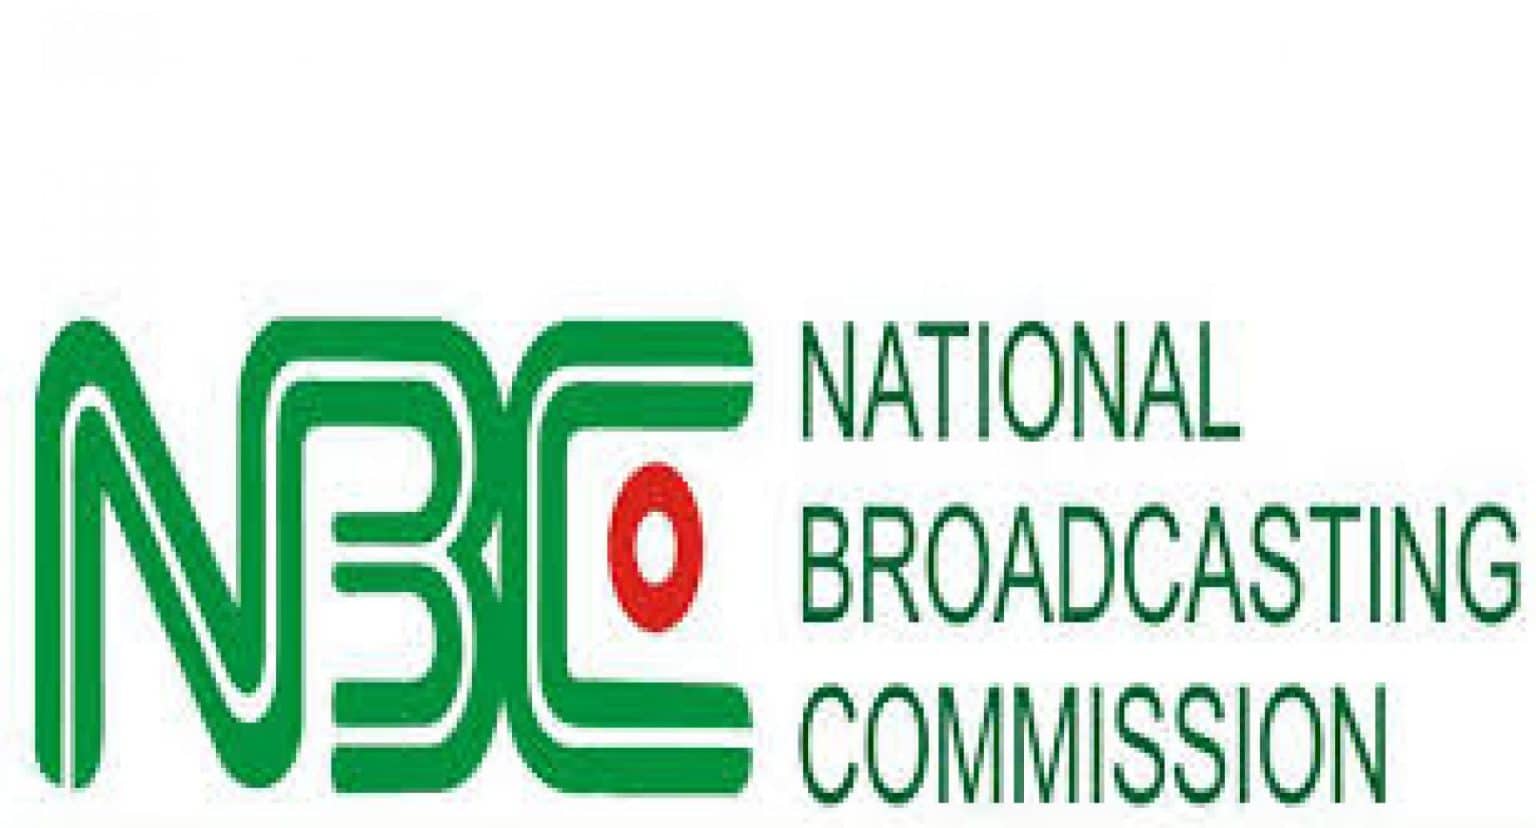 Editors’ Guild raises concerns over shutdown of broadcast stations